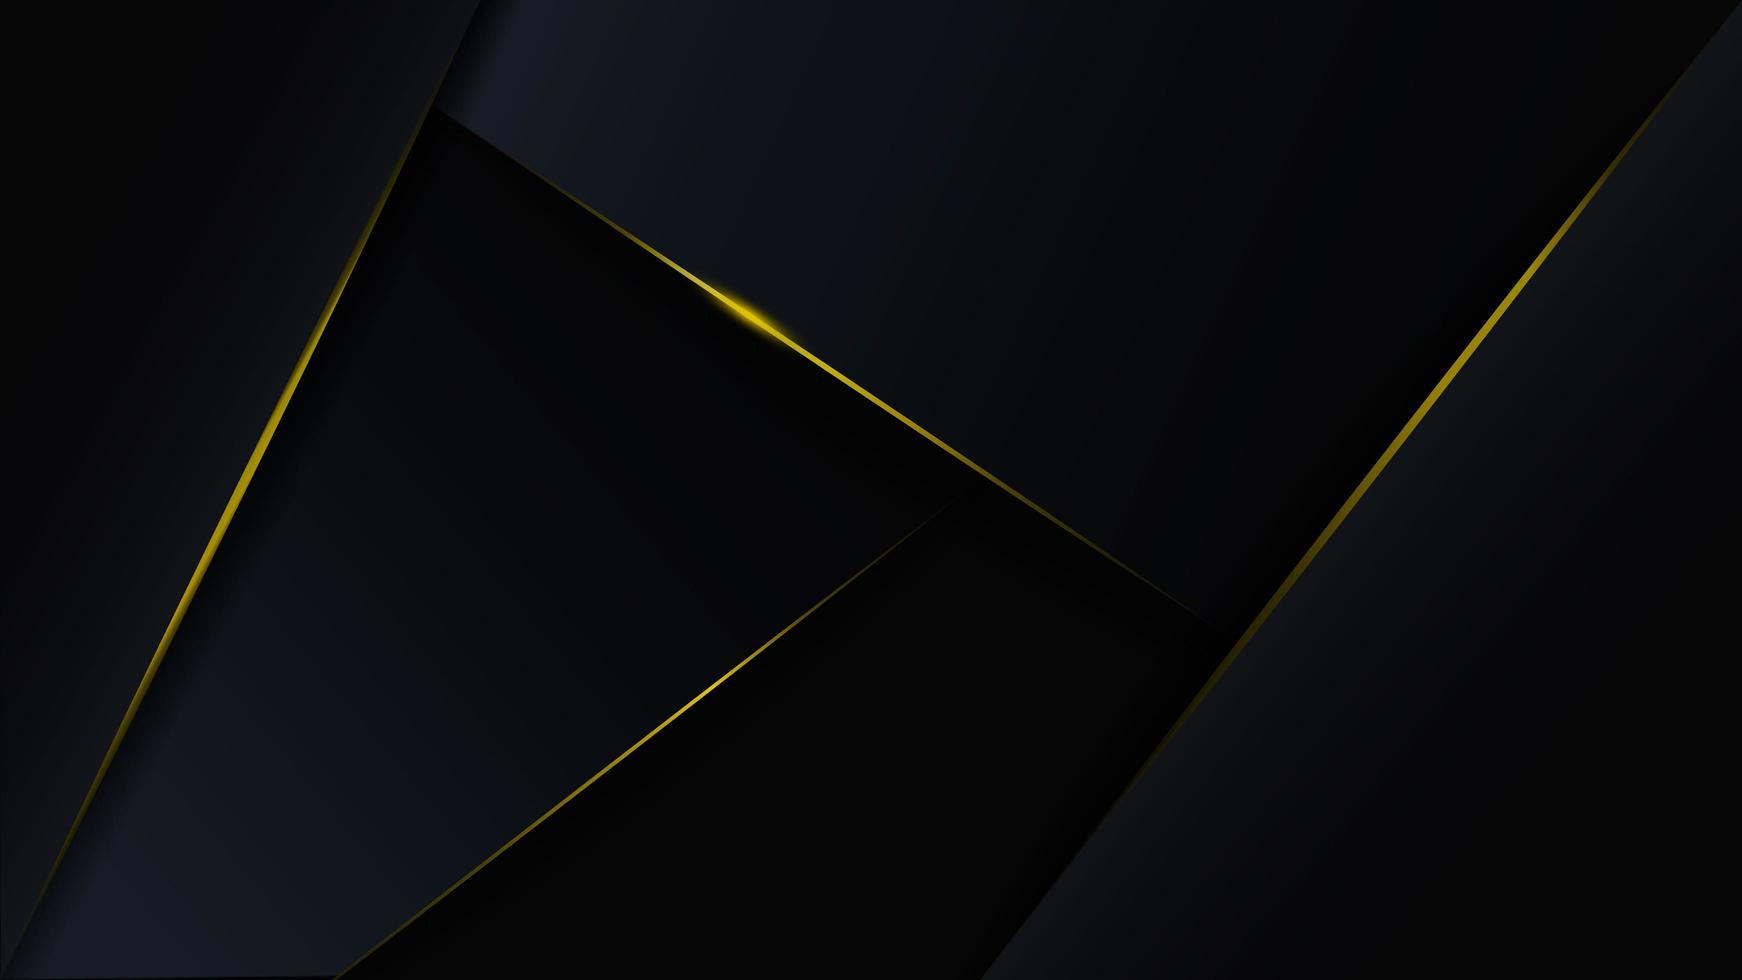 formes sombres polygonales abstraites avec des bordures dorées brillantes vecteur